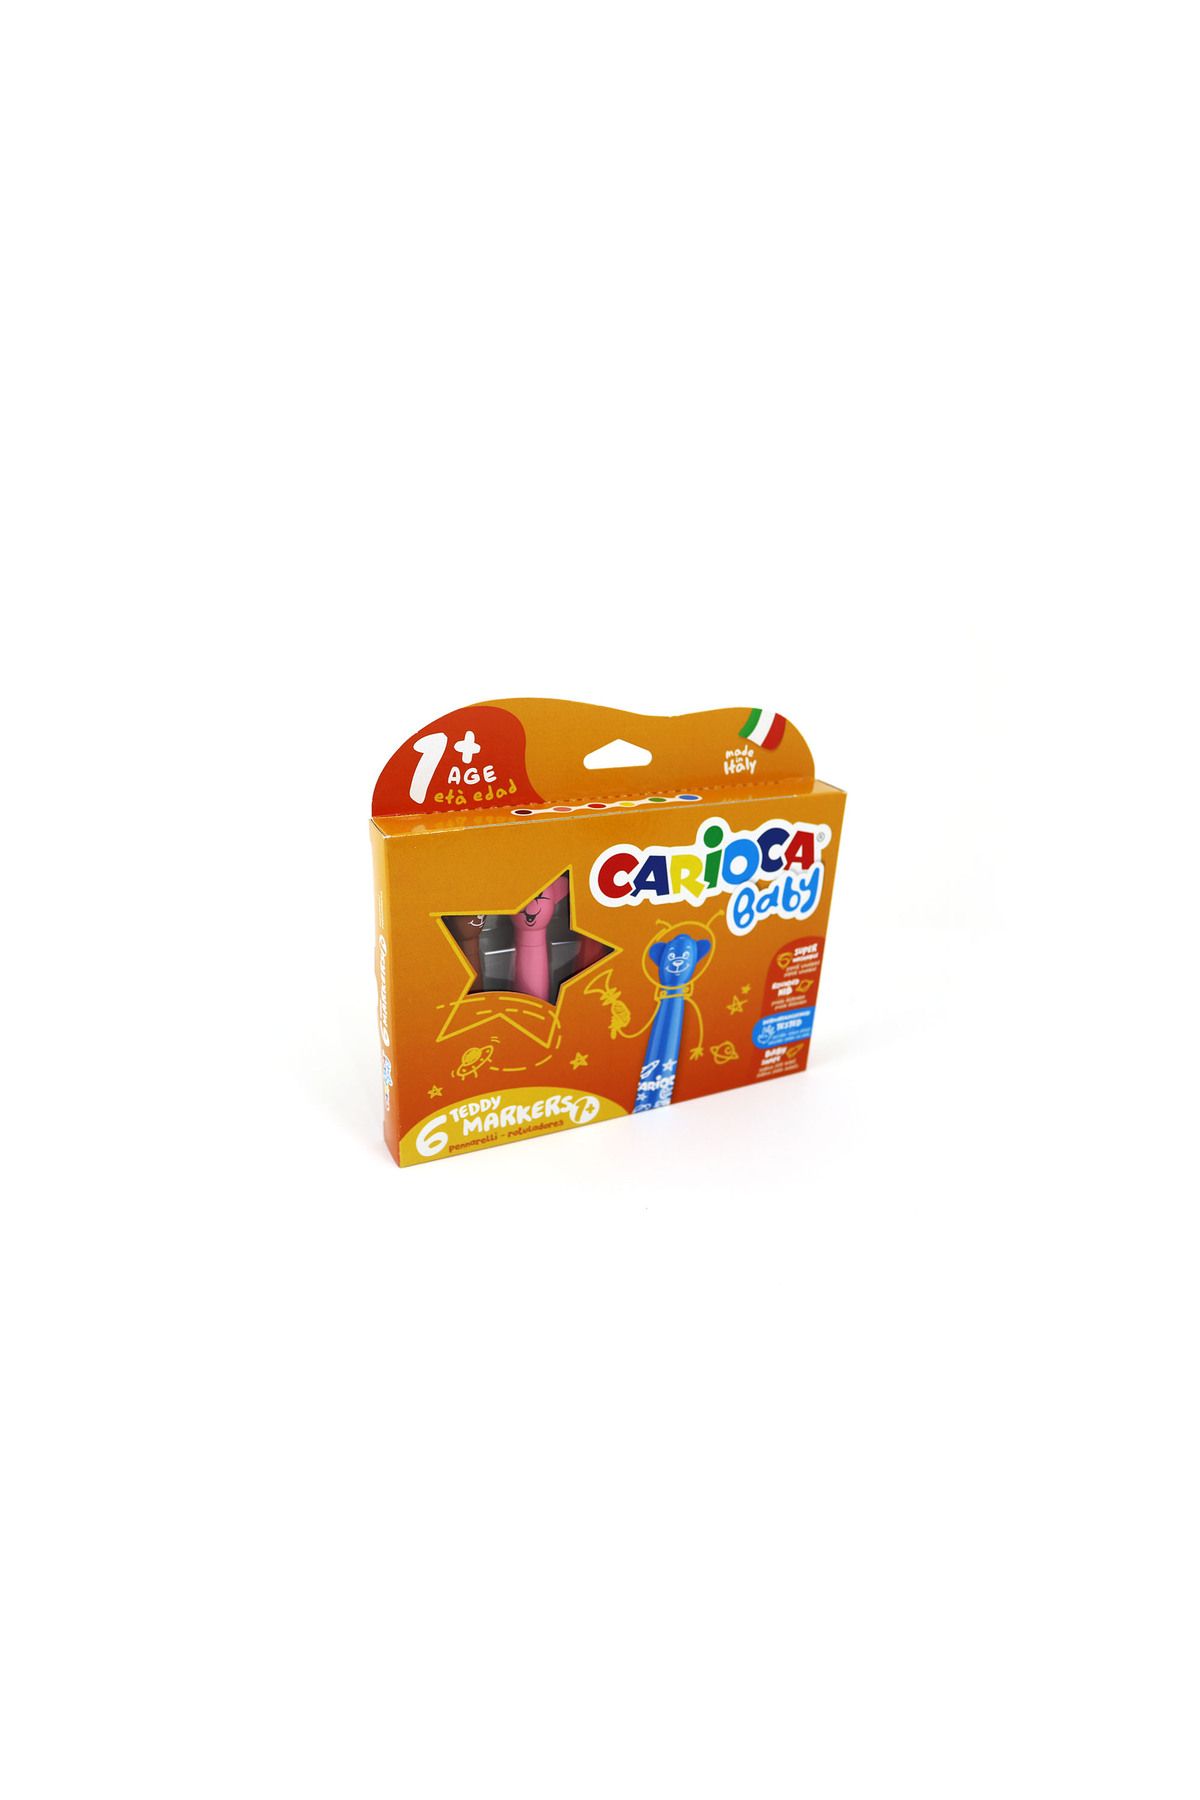 Carioca Jumbo Baby Super Washable Felt Tip Crayons Pack of 12 - Trendyol